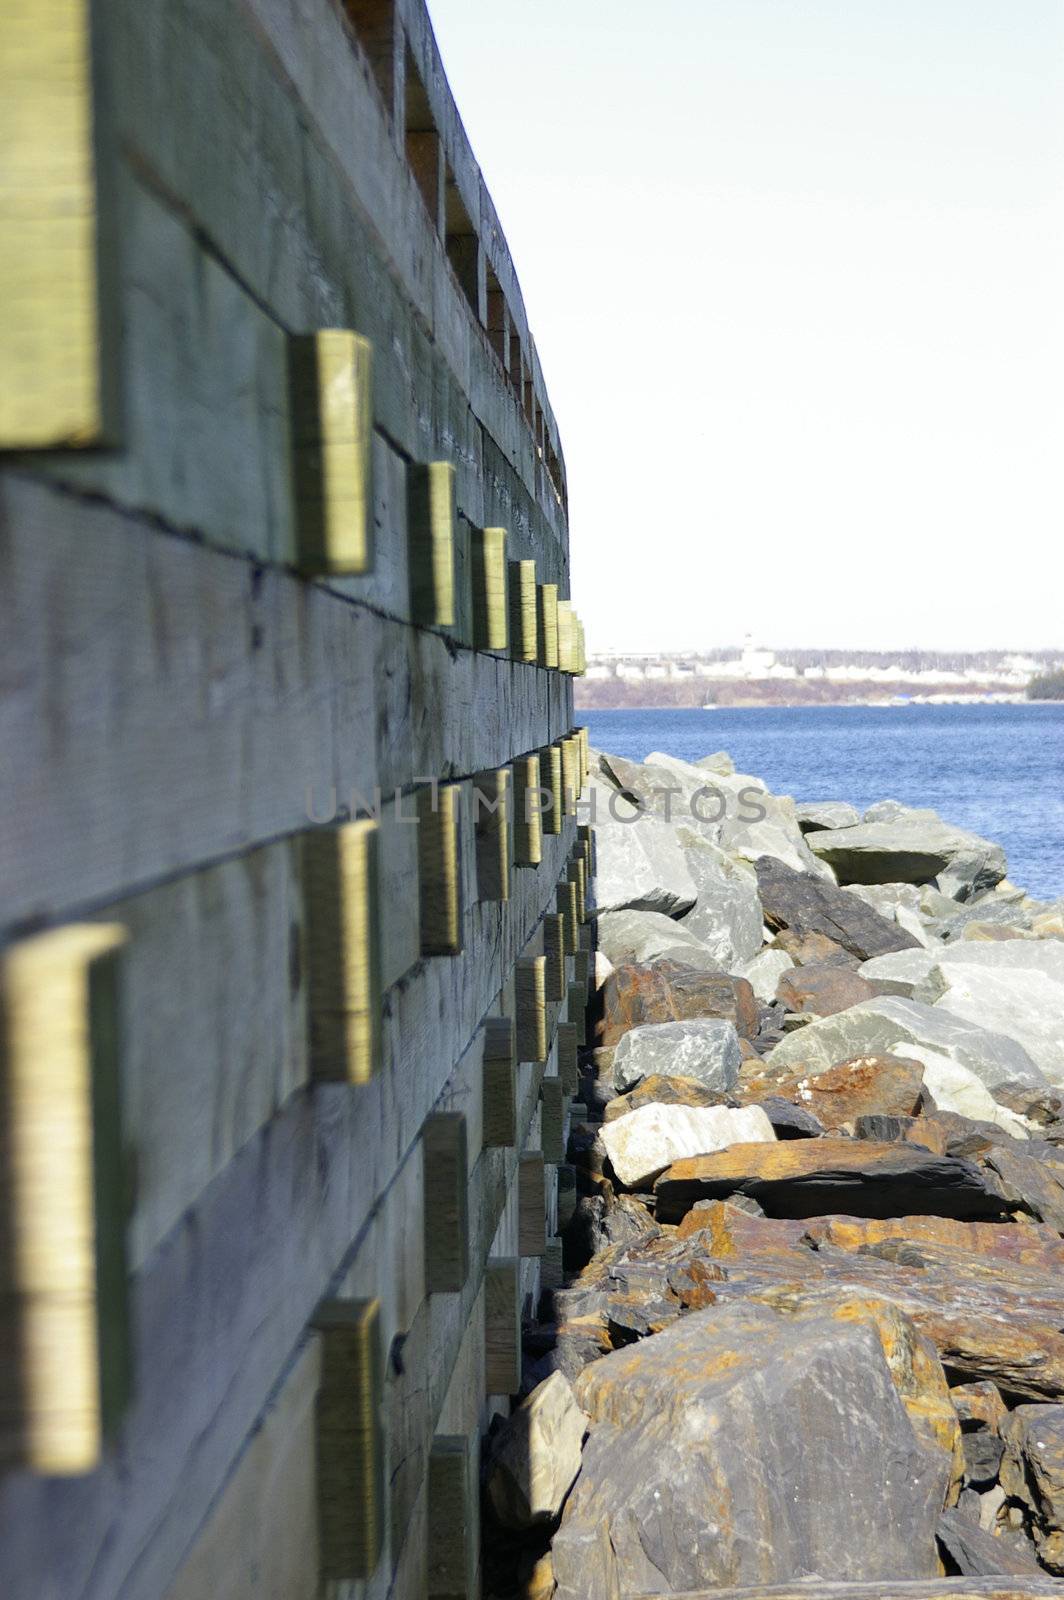 A side view of a boardwalk along a rocky shore line